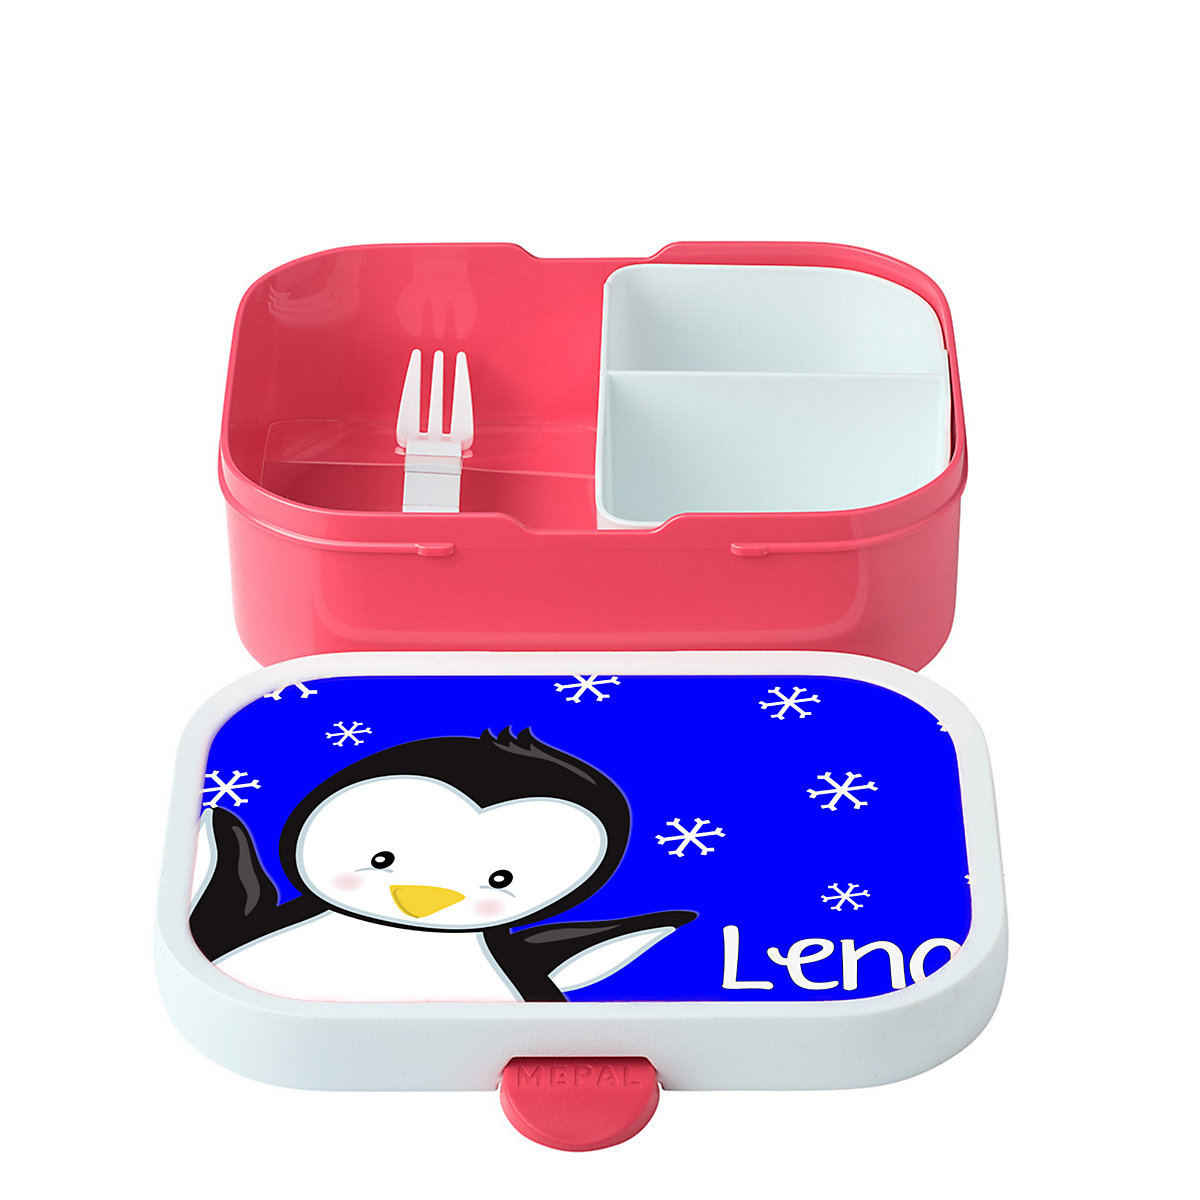 CreaDesign Brotdose Mepal Kinder mit Fächern mit Name personalisiert Pinguin blau RI10988